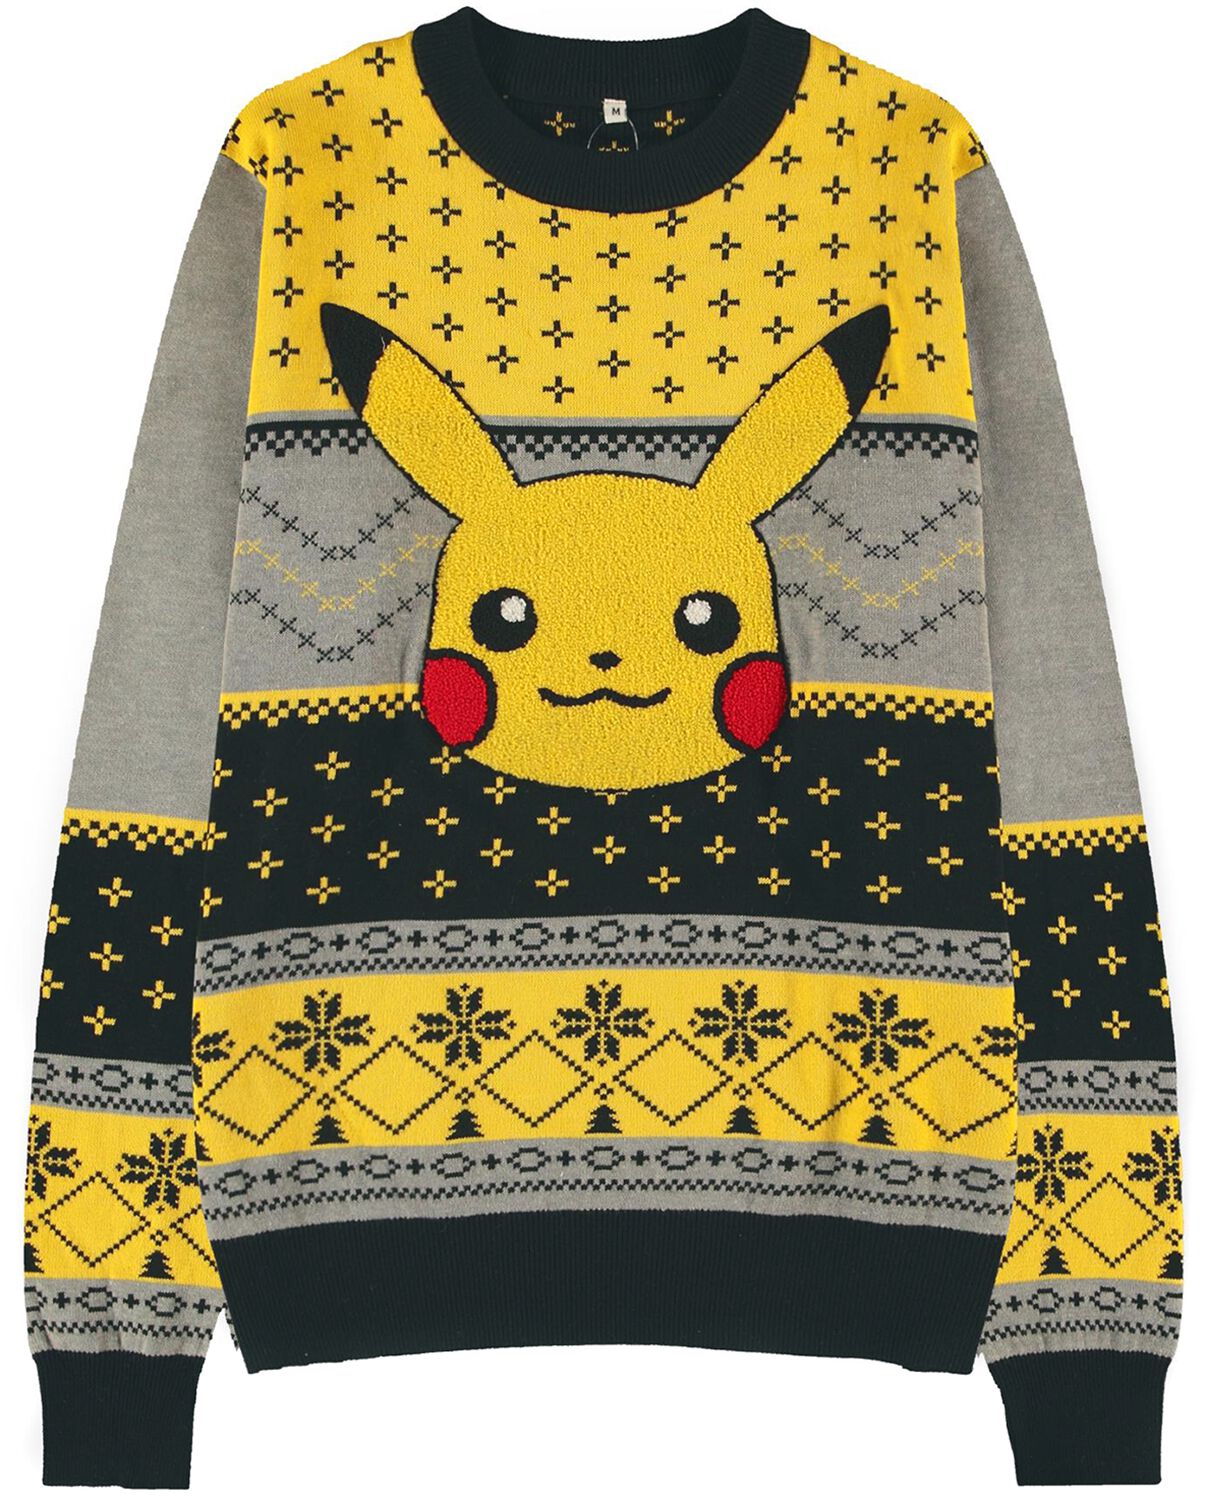 Pokémon Pikachu Christmas jumper multicolour